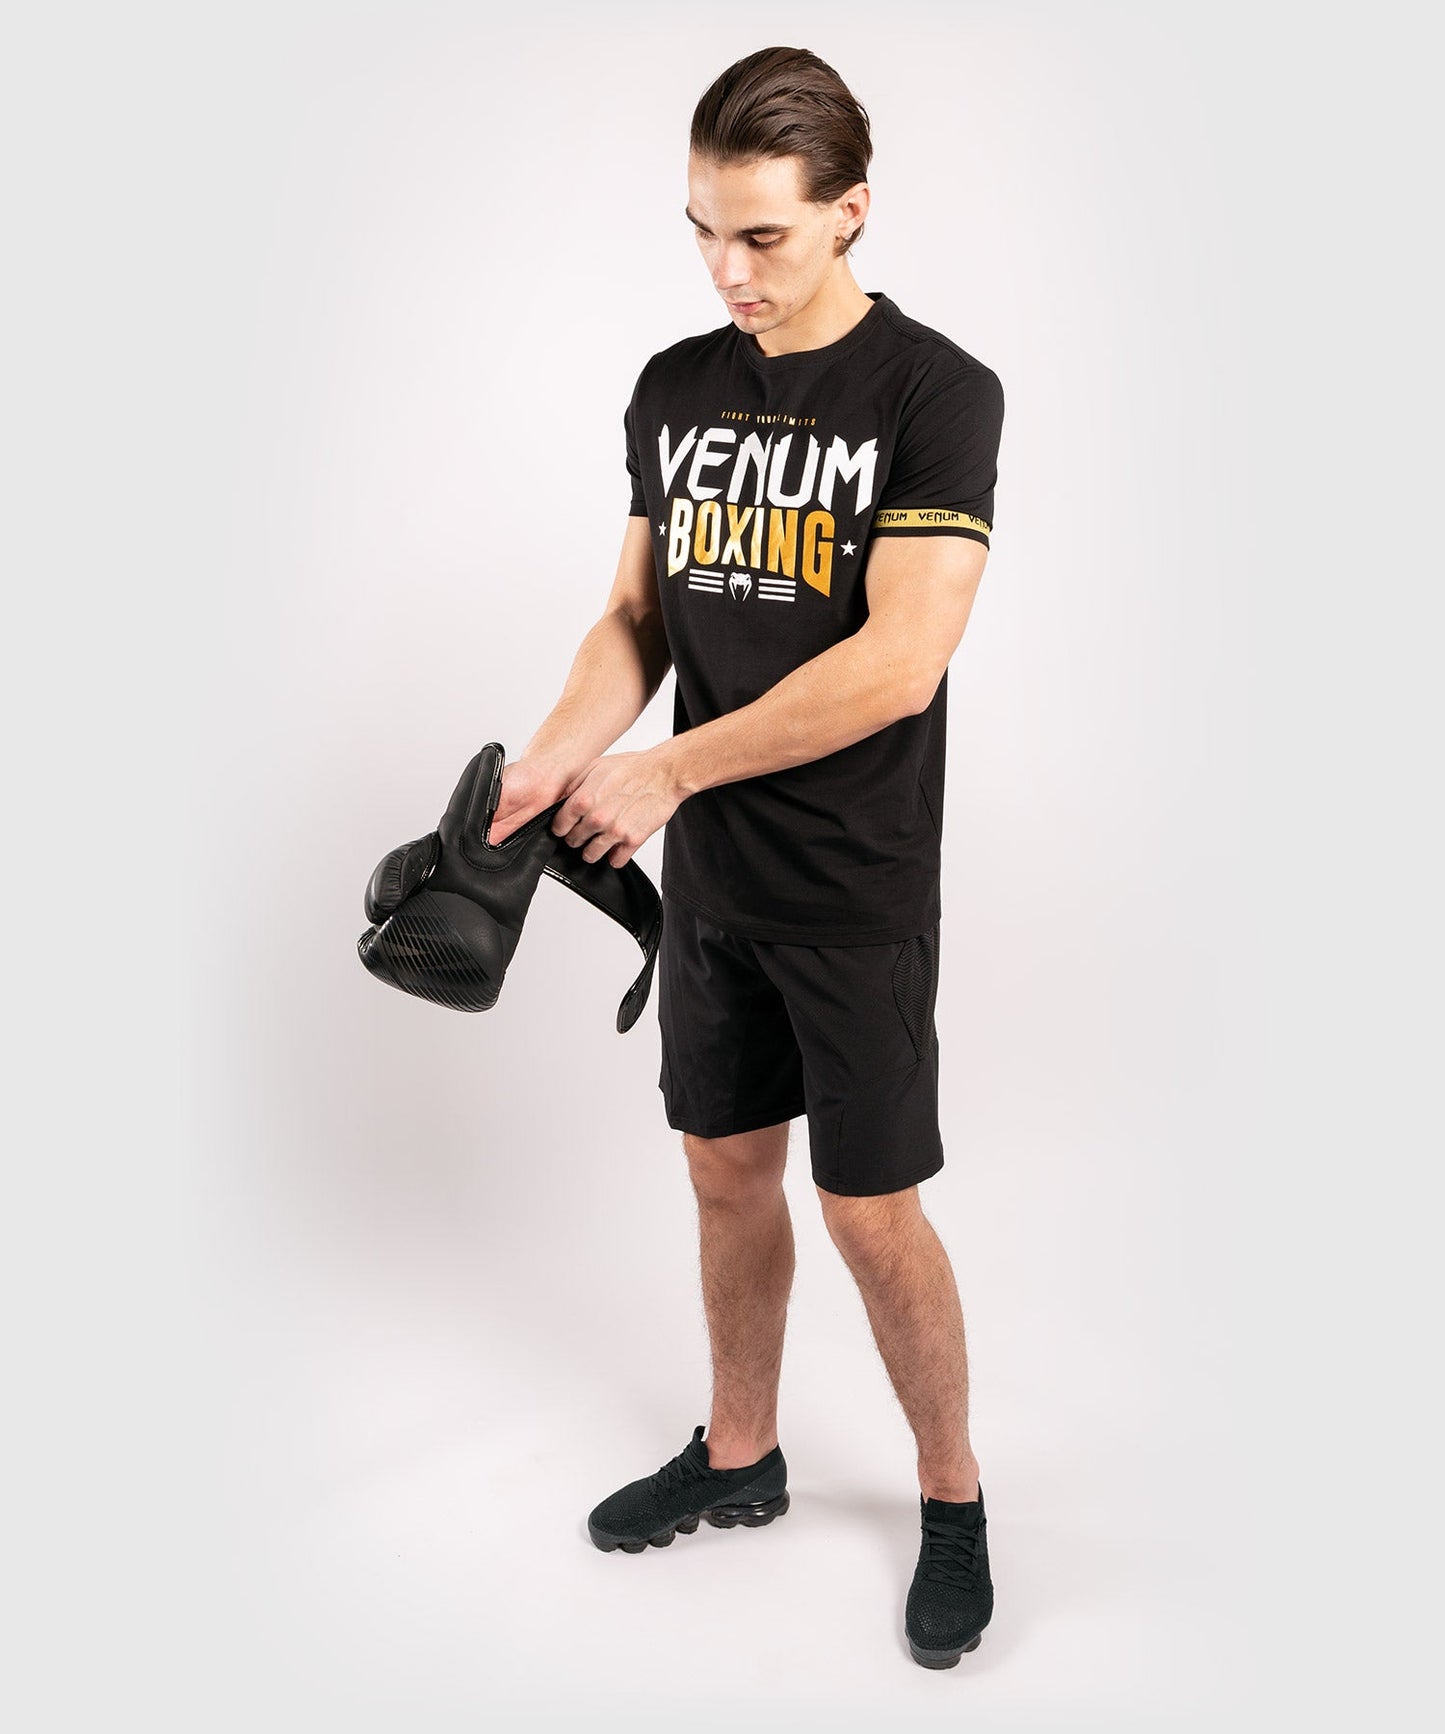 Venum BOXING Classic 20 T-Shirt - Black/Gold